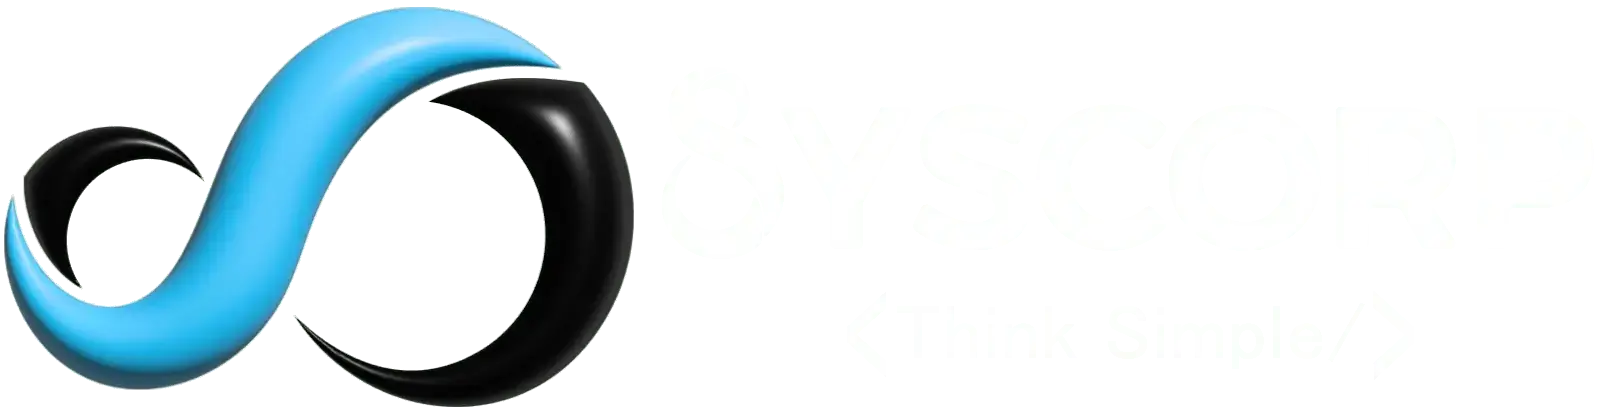 Company logo of SysCorp Technology PVT LTD